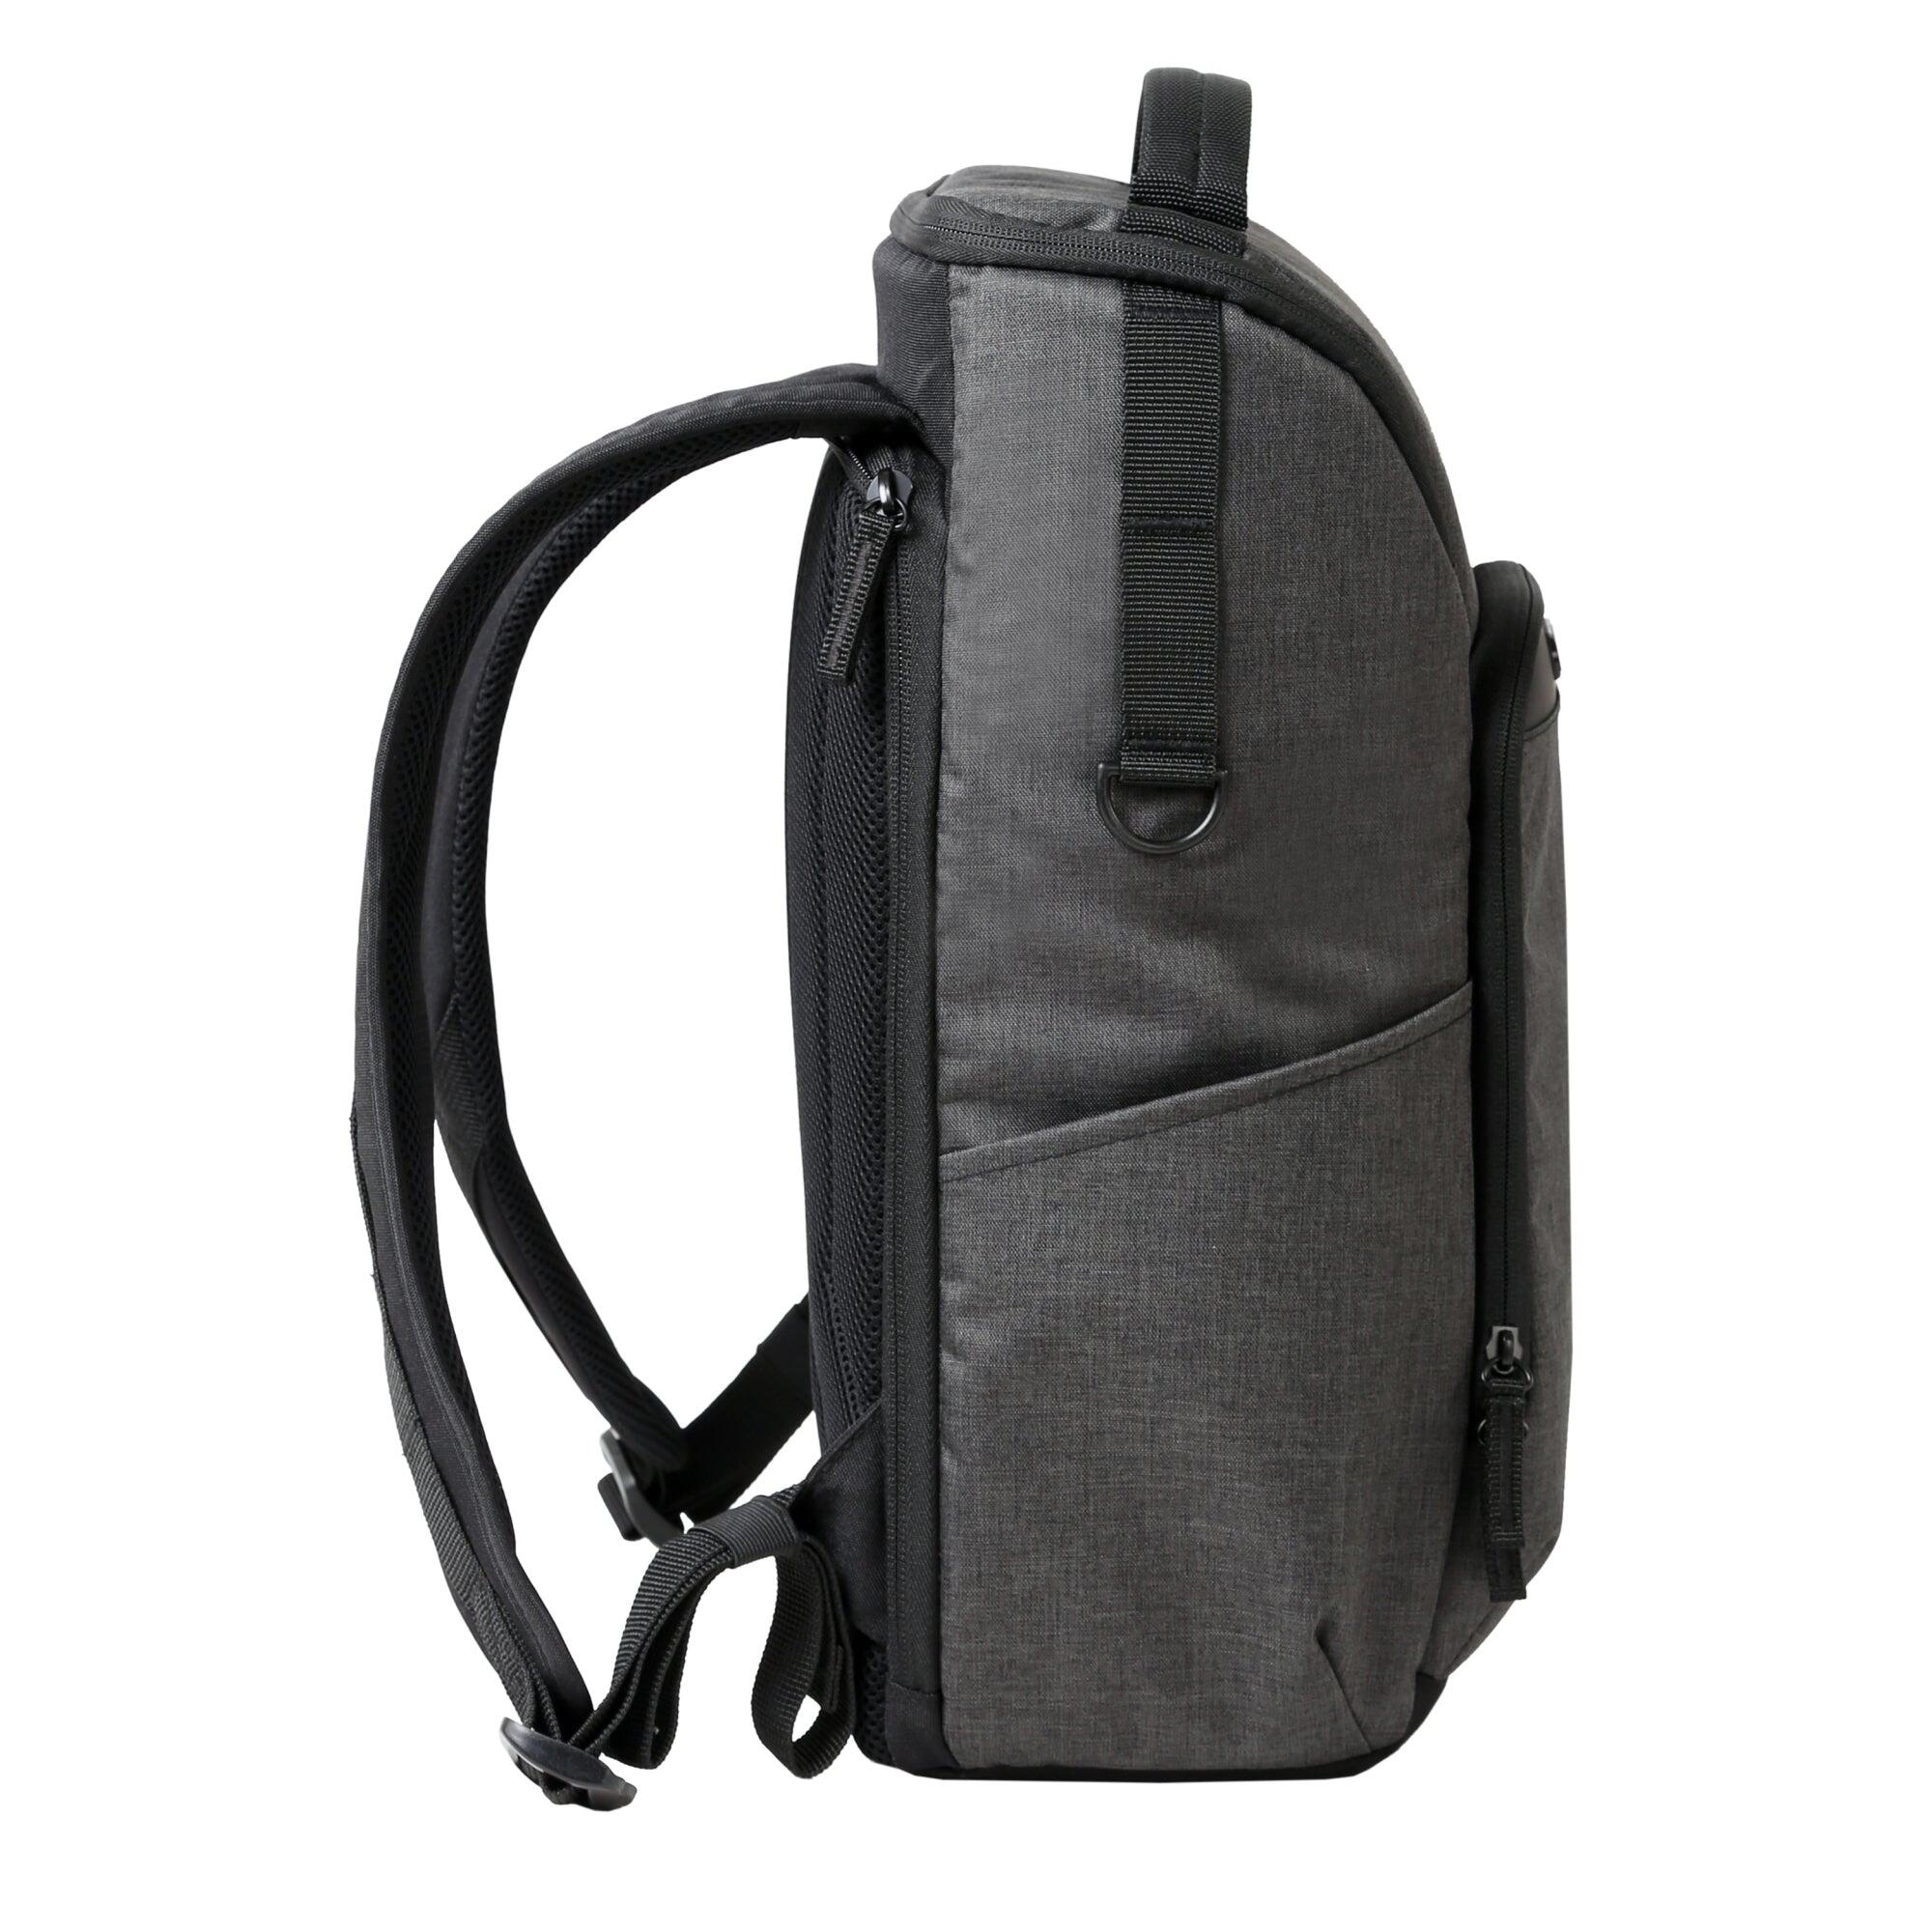 VANGUARD VESTA Aspire 41 GY Camera Backpack - Grey